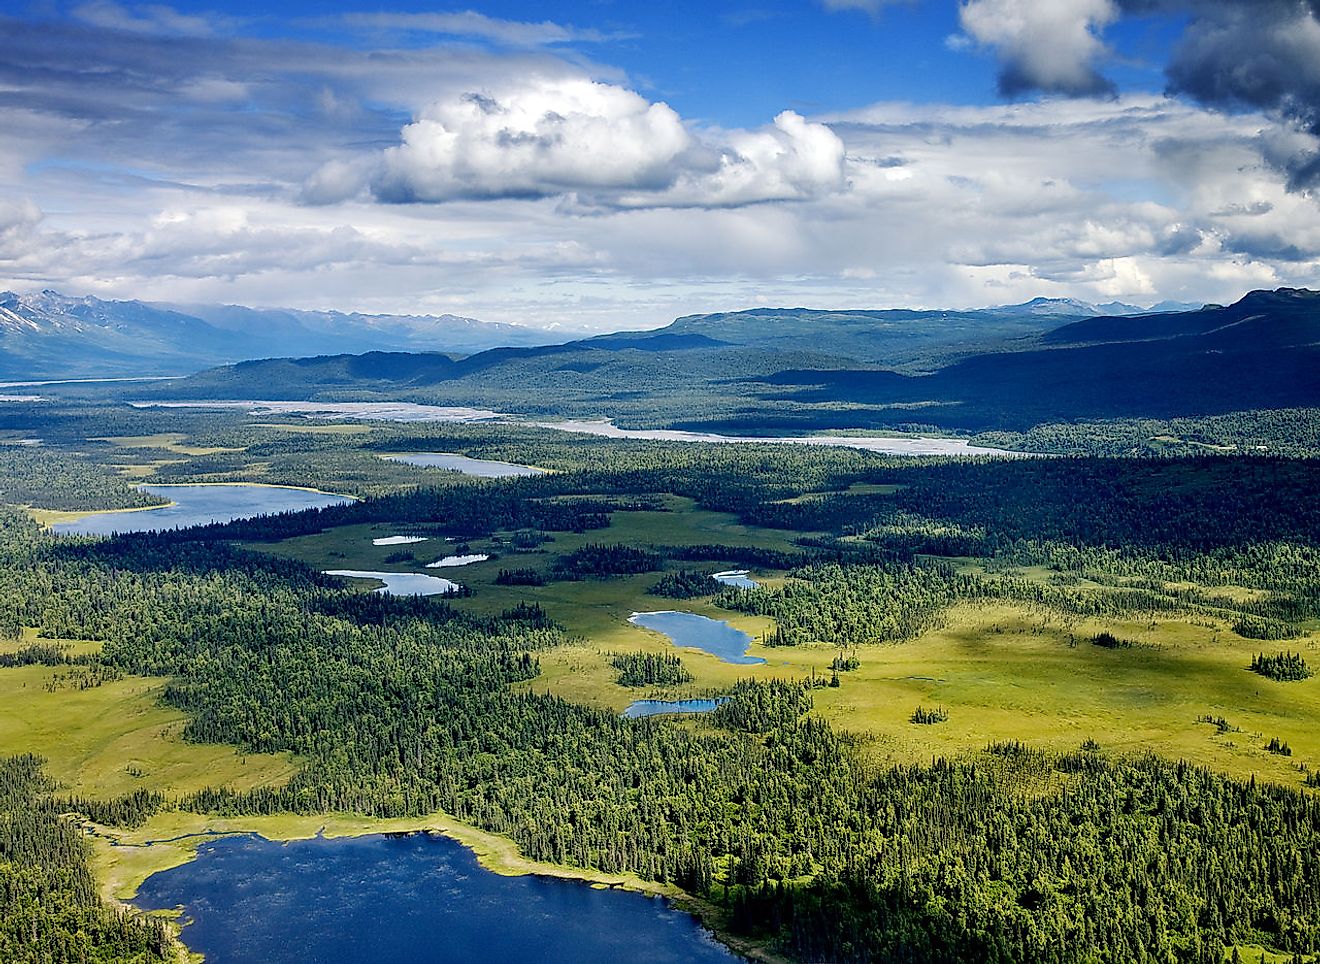 Denali National Park, Alaska. Image credit: Carol M. Highsmith/Public domain